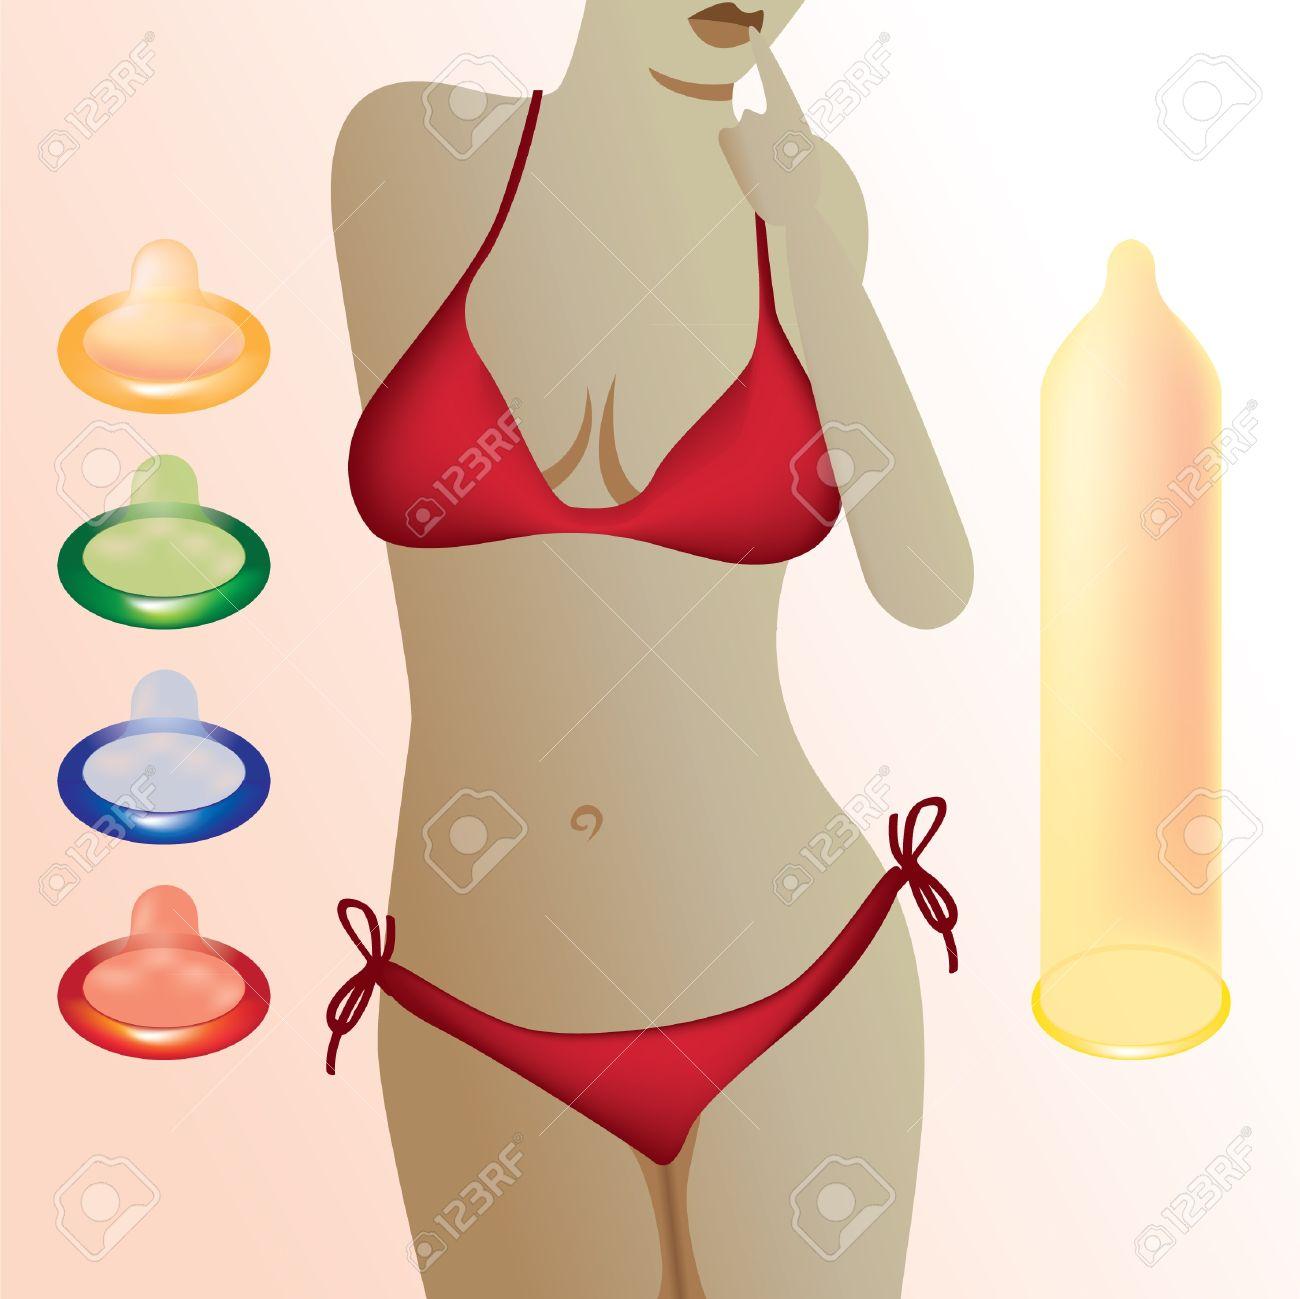 Hot latina using a condom